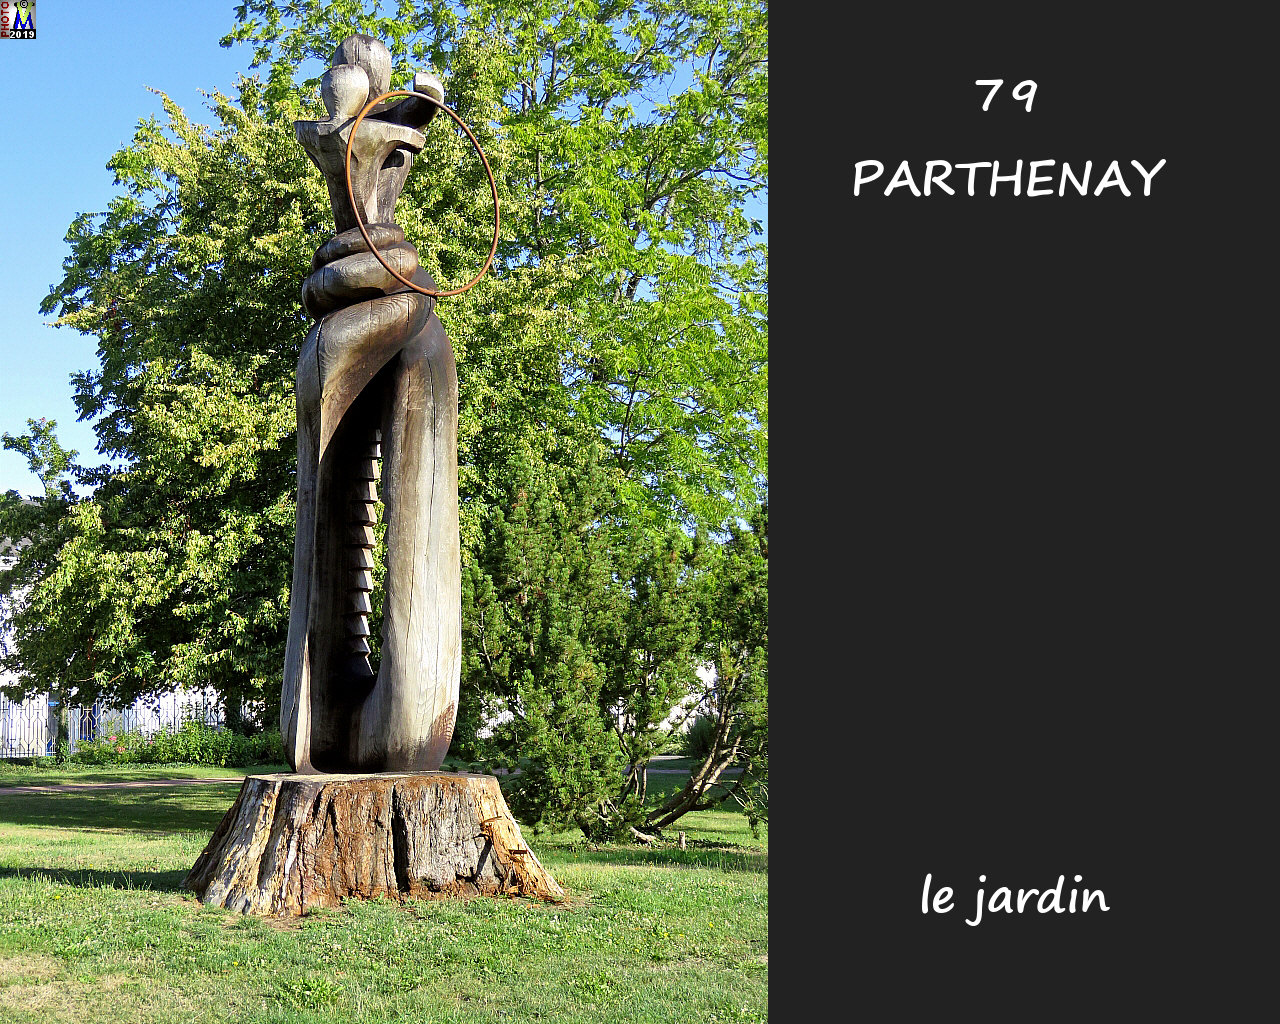 79PARTHENAY_jardin_1010.jpg